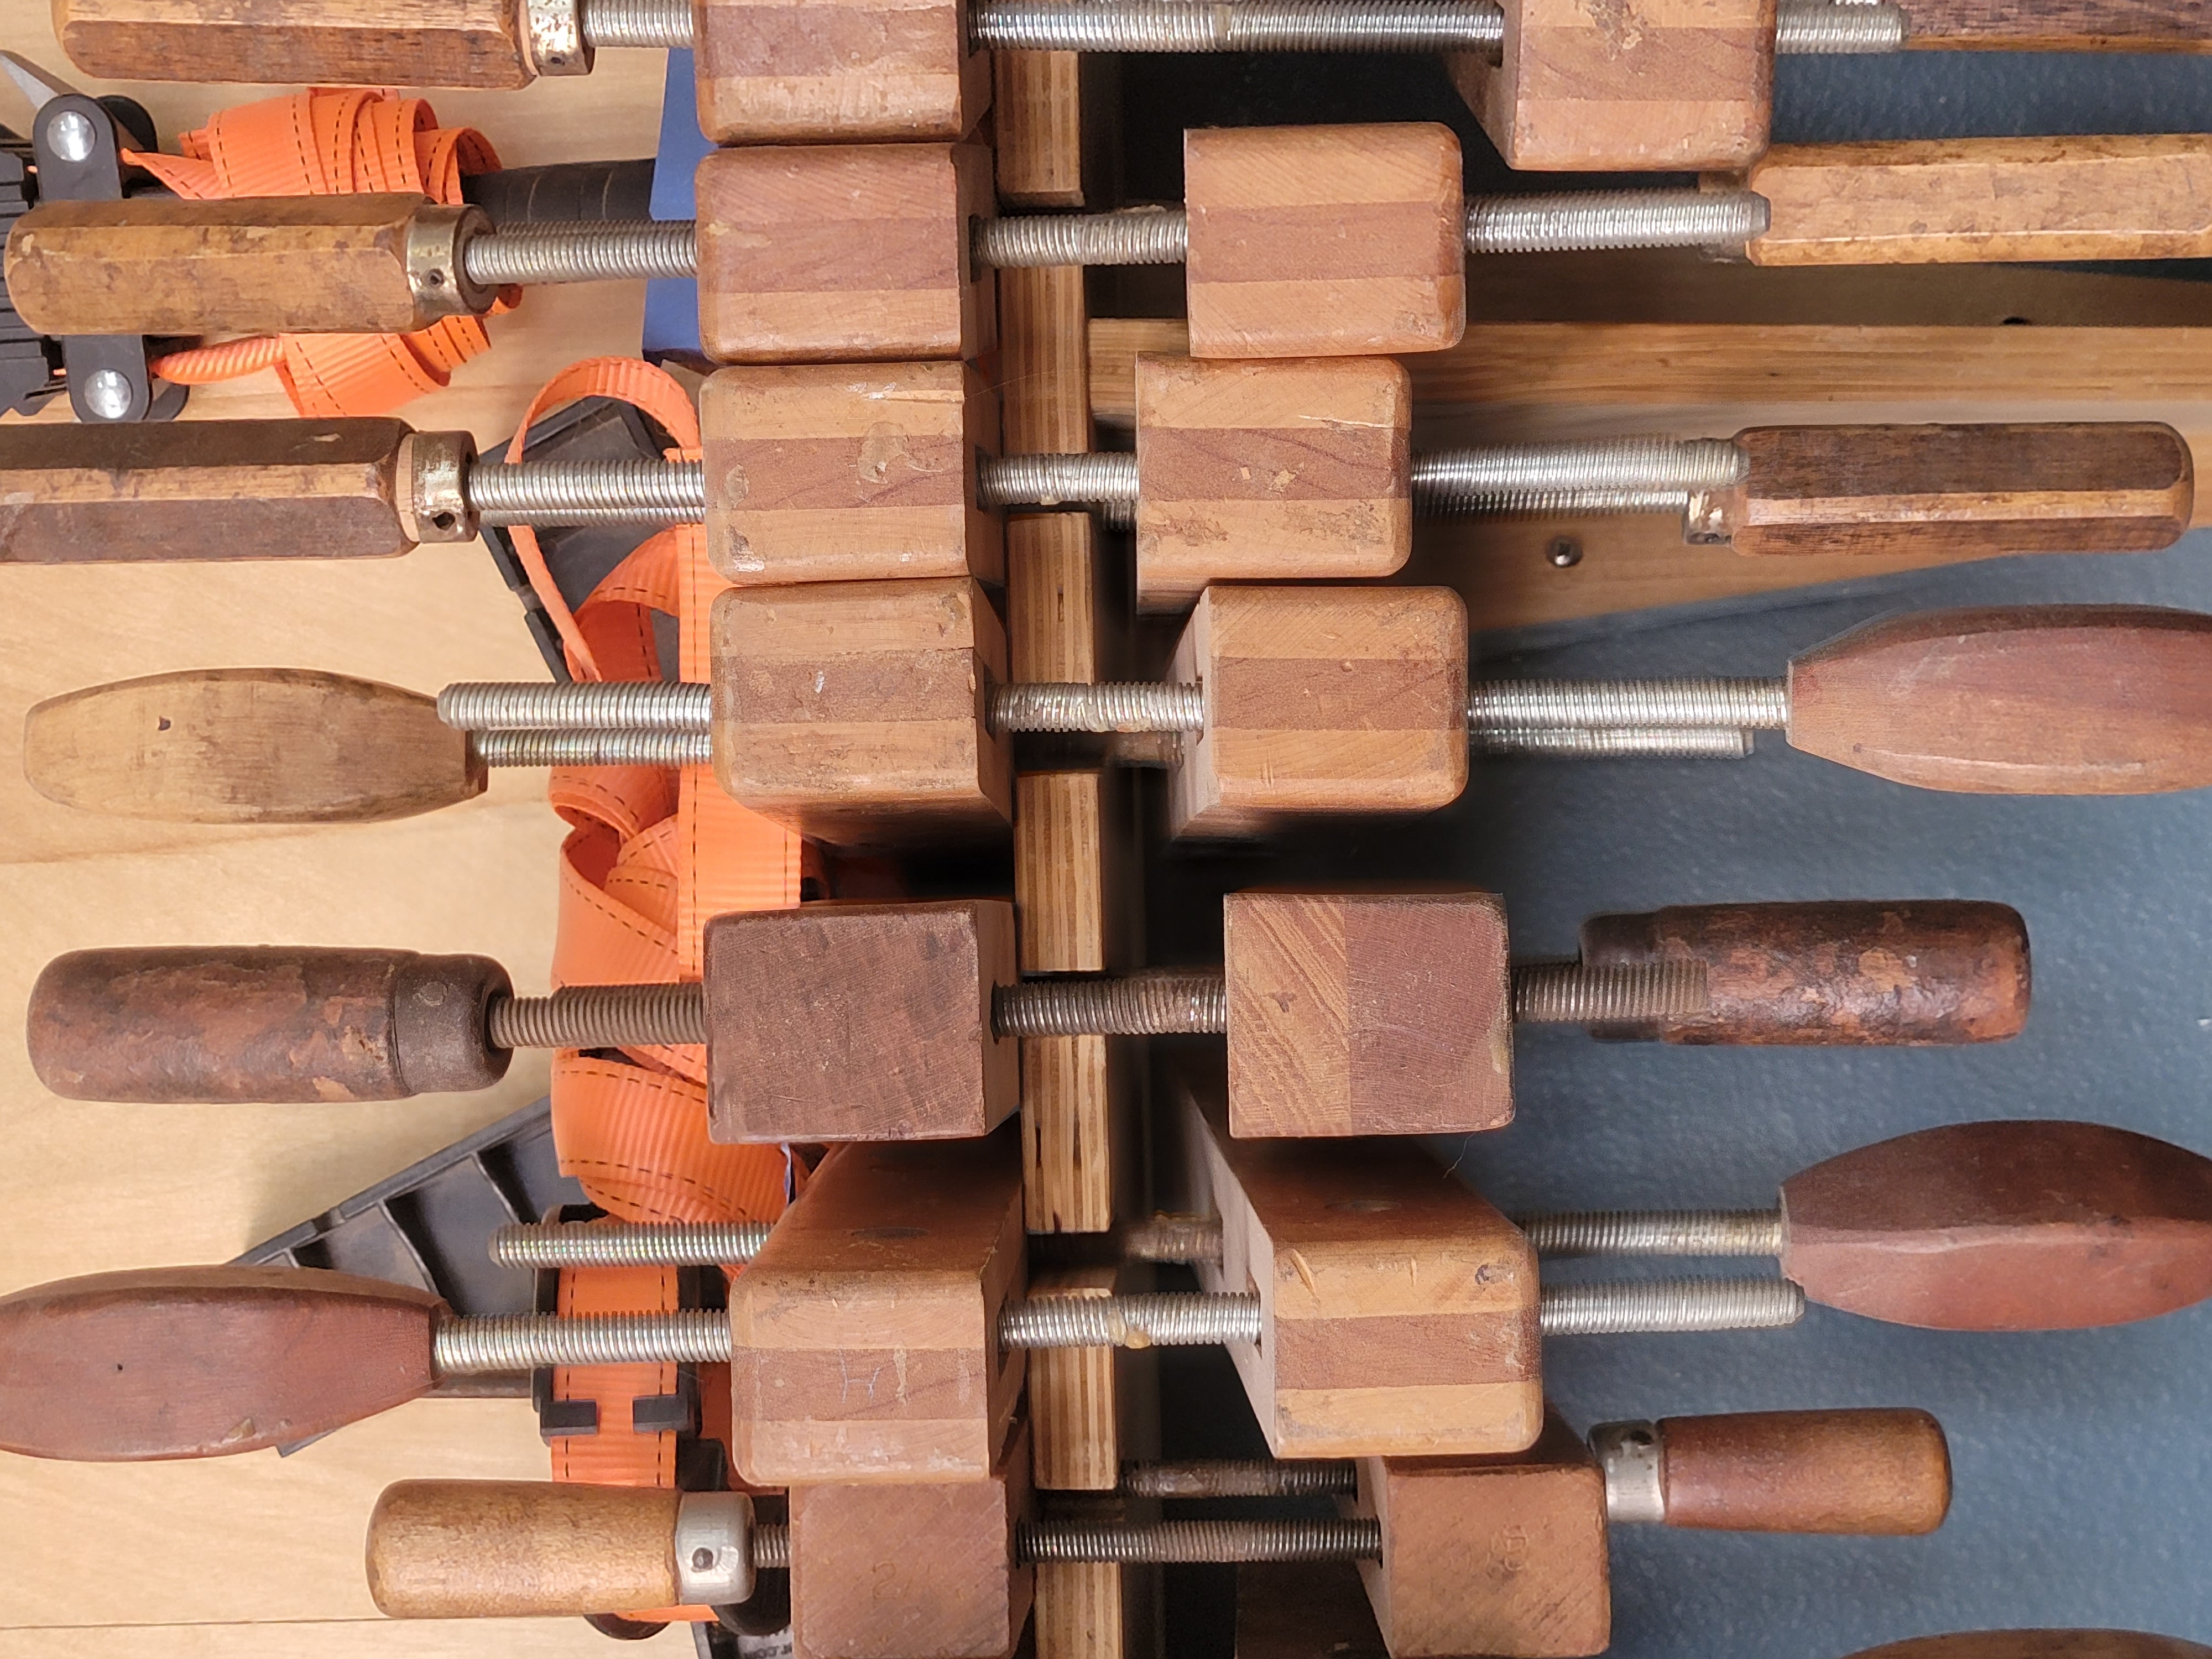 13 Best Woodworking TradeShow Events